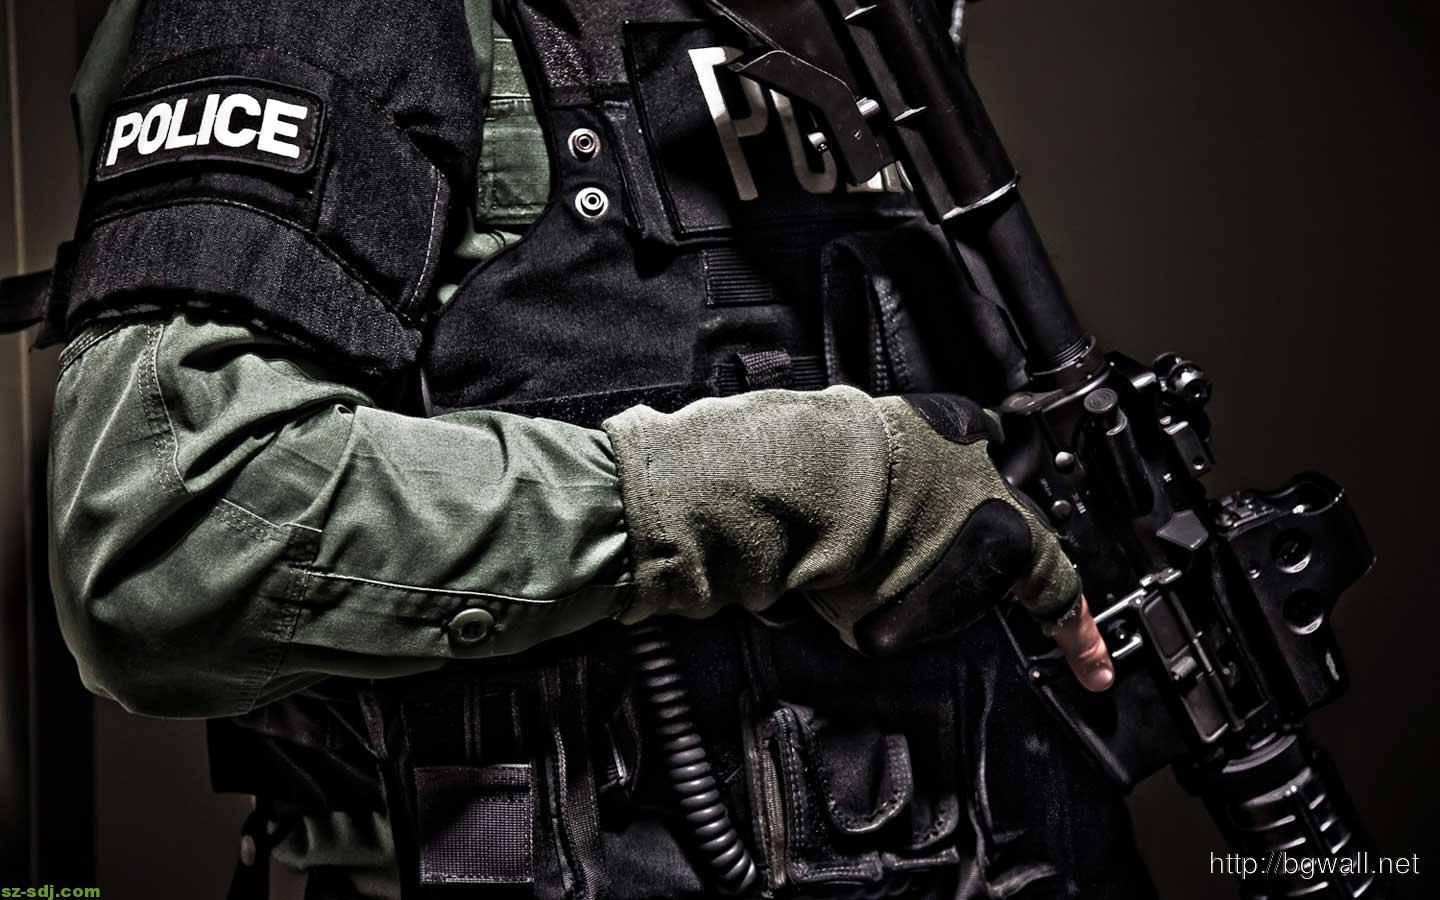 Police Vest And Gun Background